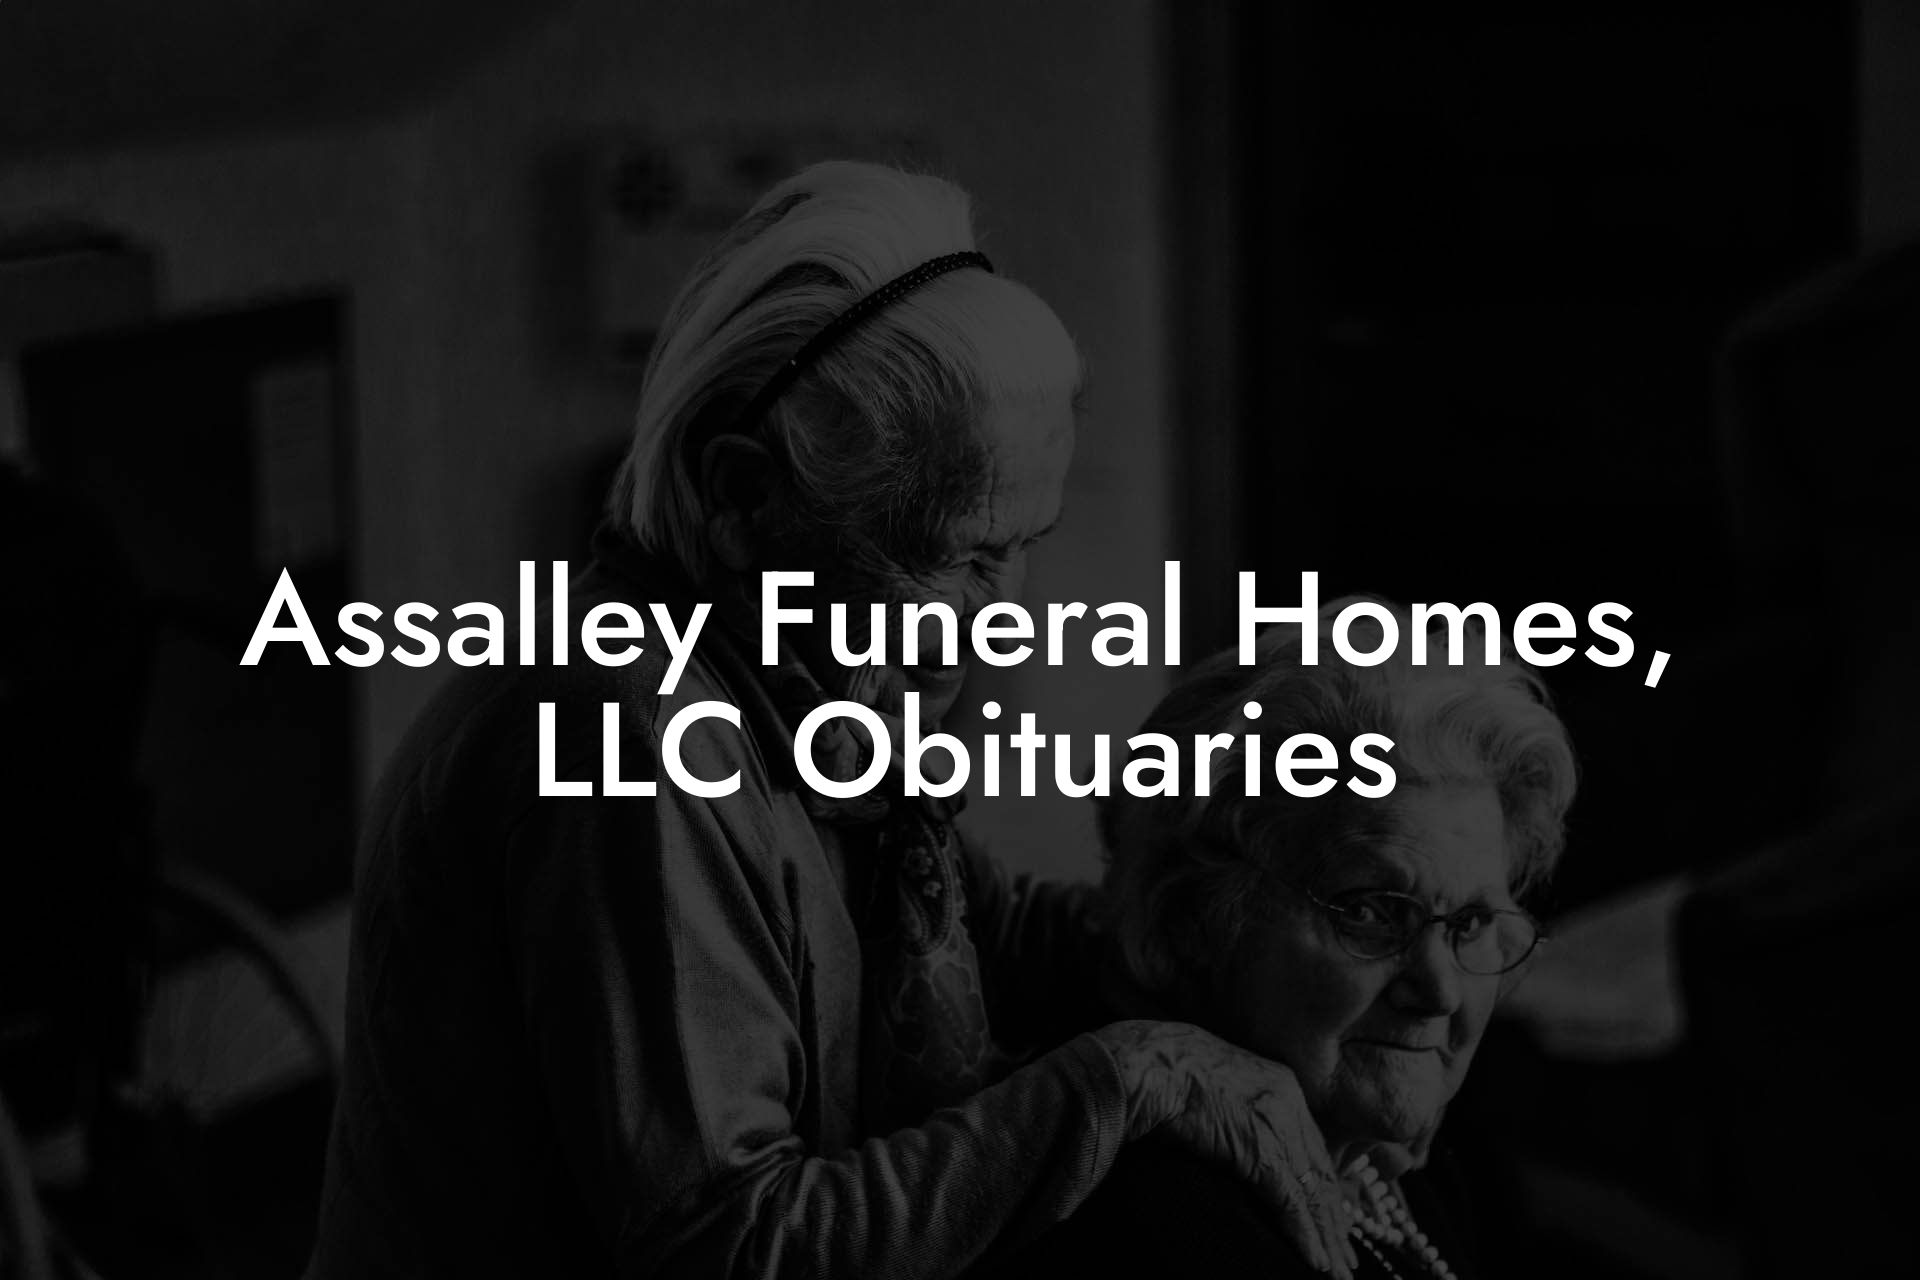 Assalley Funeral Homes, LLC Obituaries